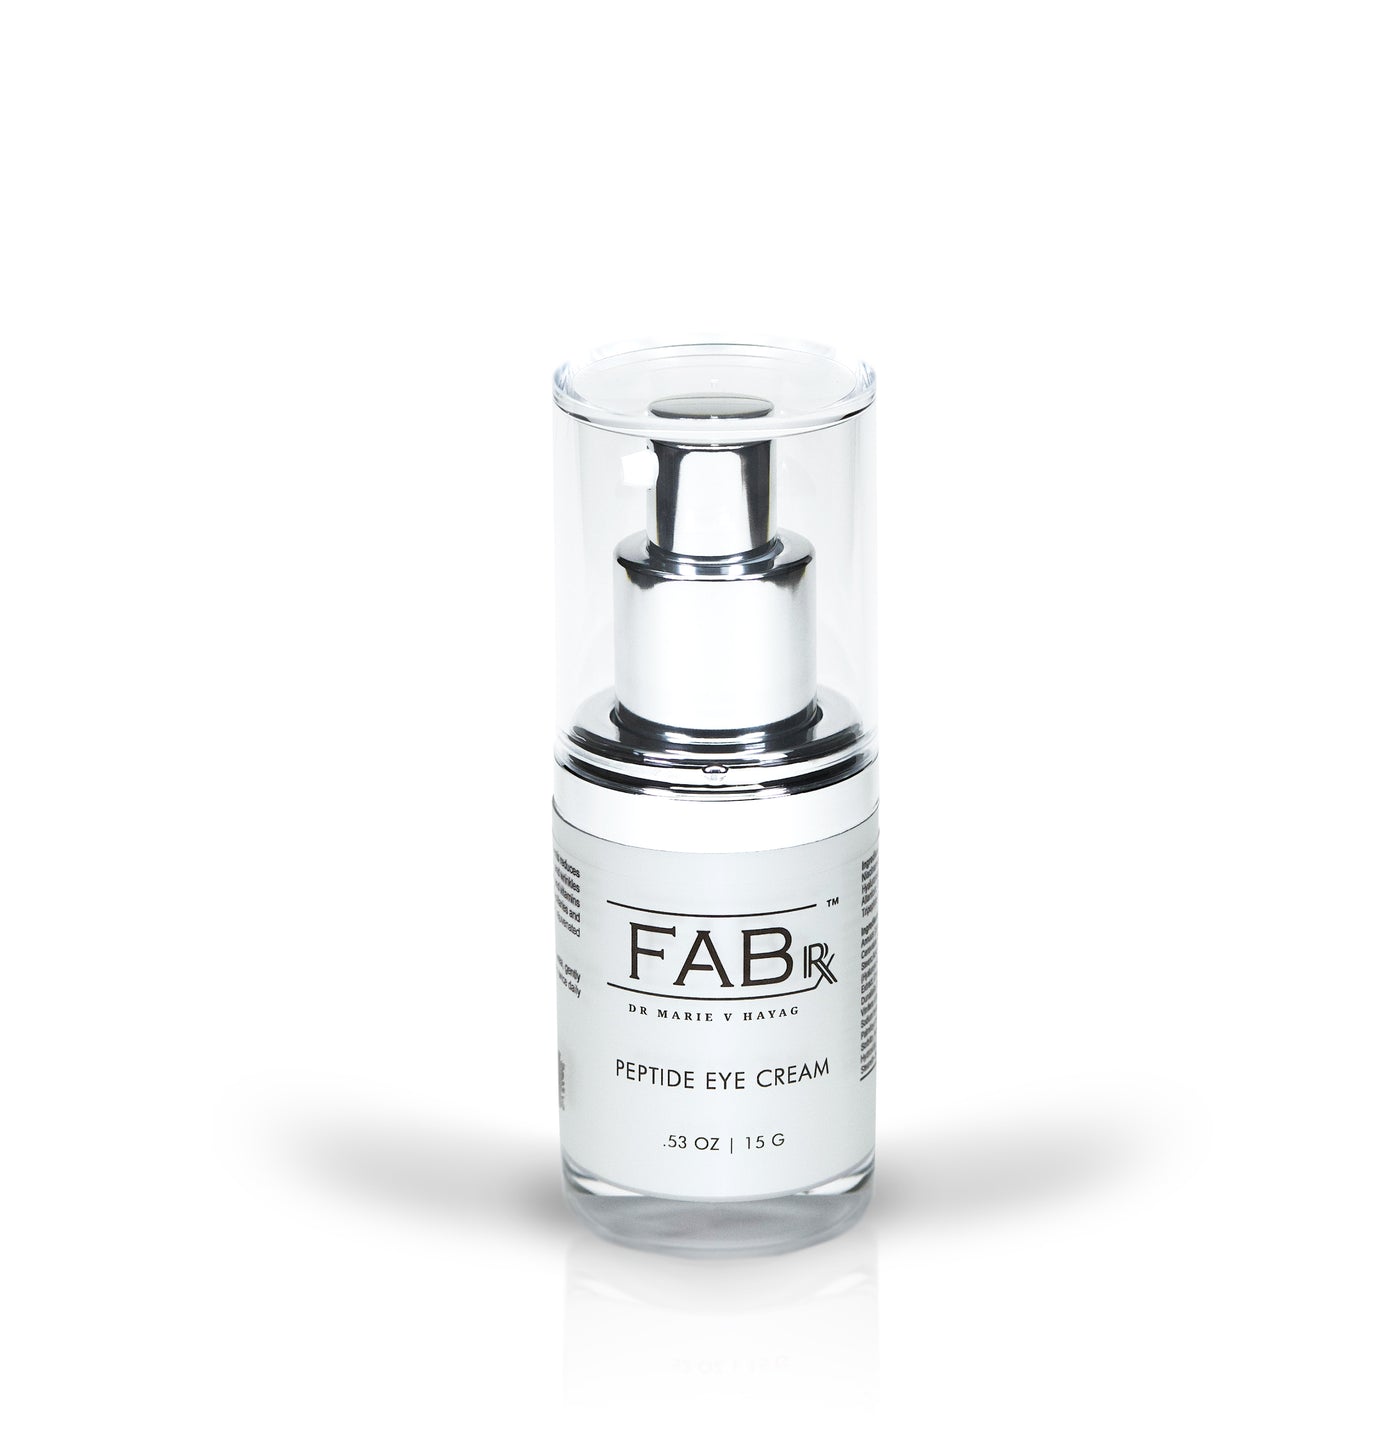 FABrx Peptide Eye Cream